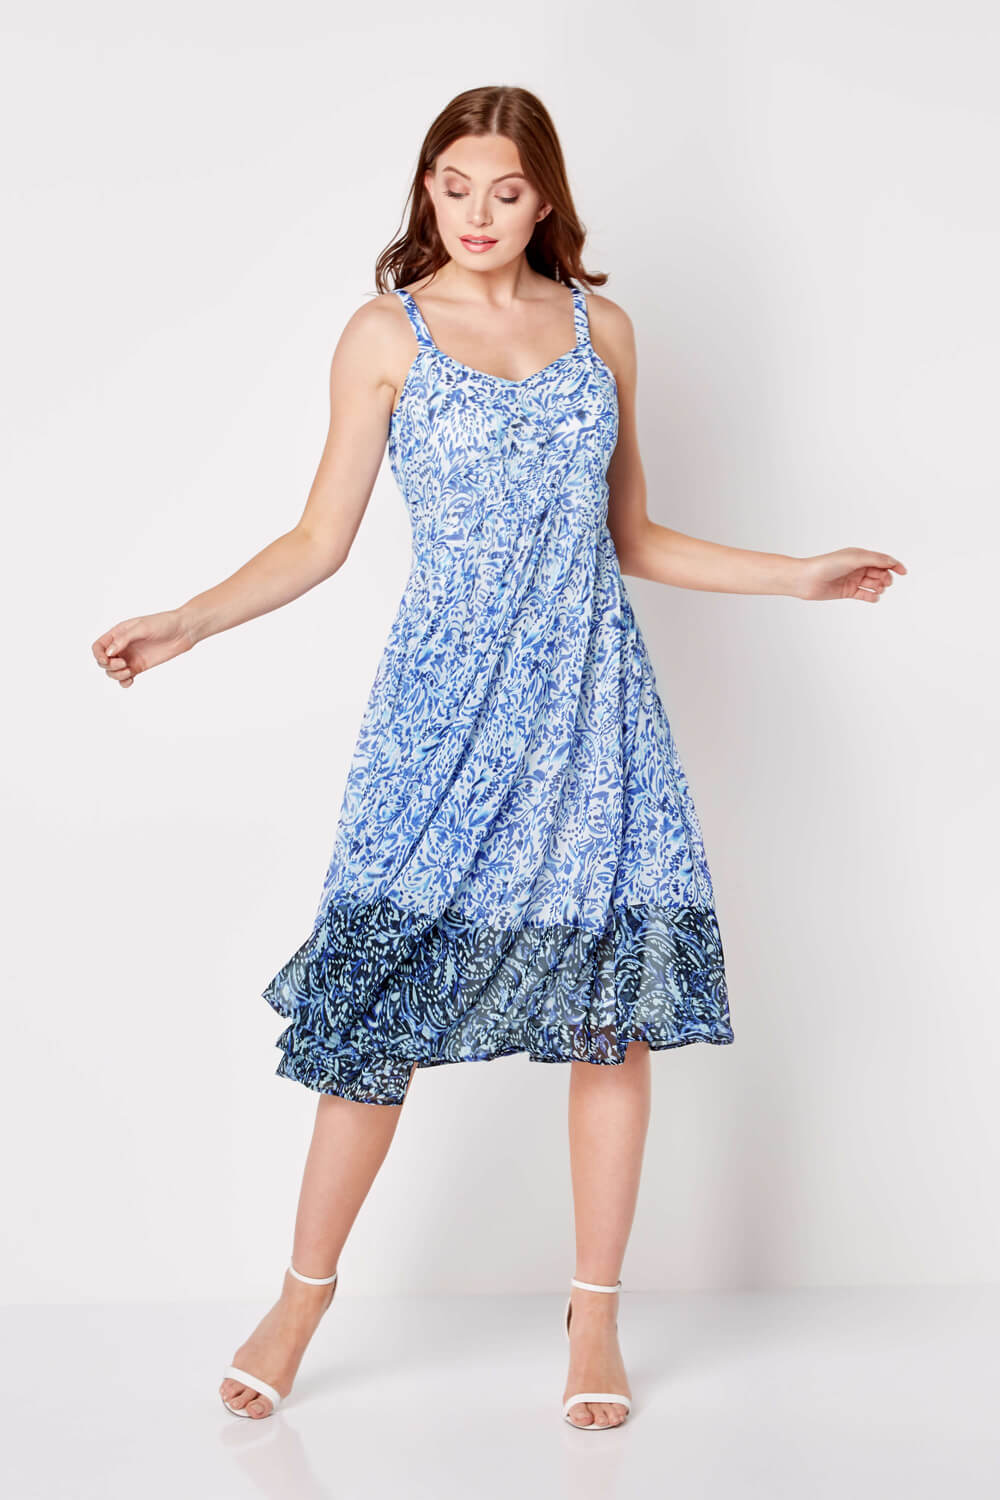 roman originals blue dress